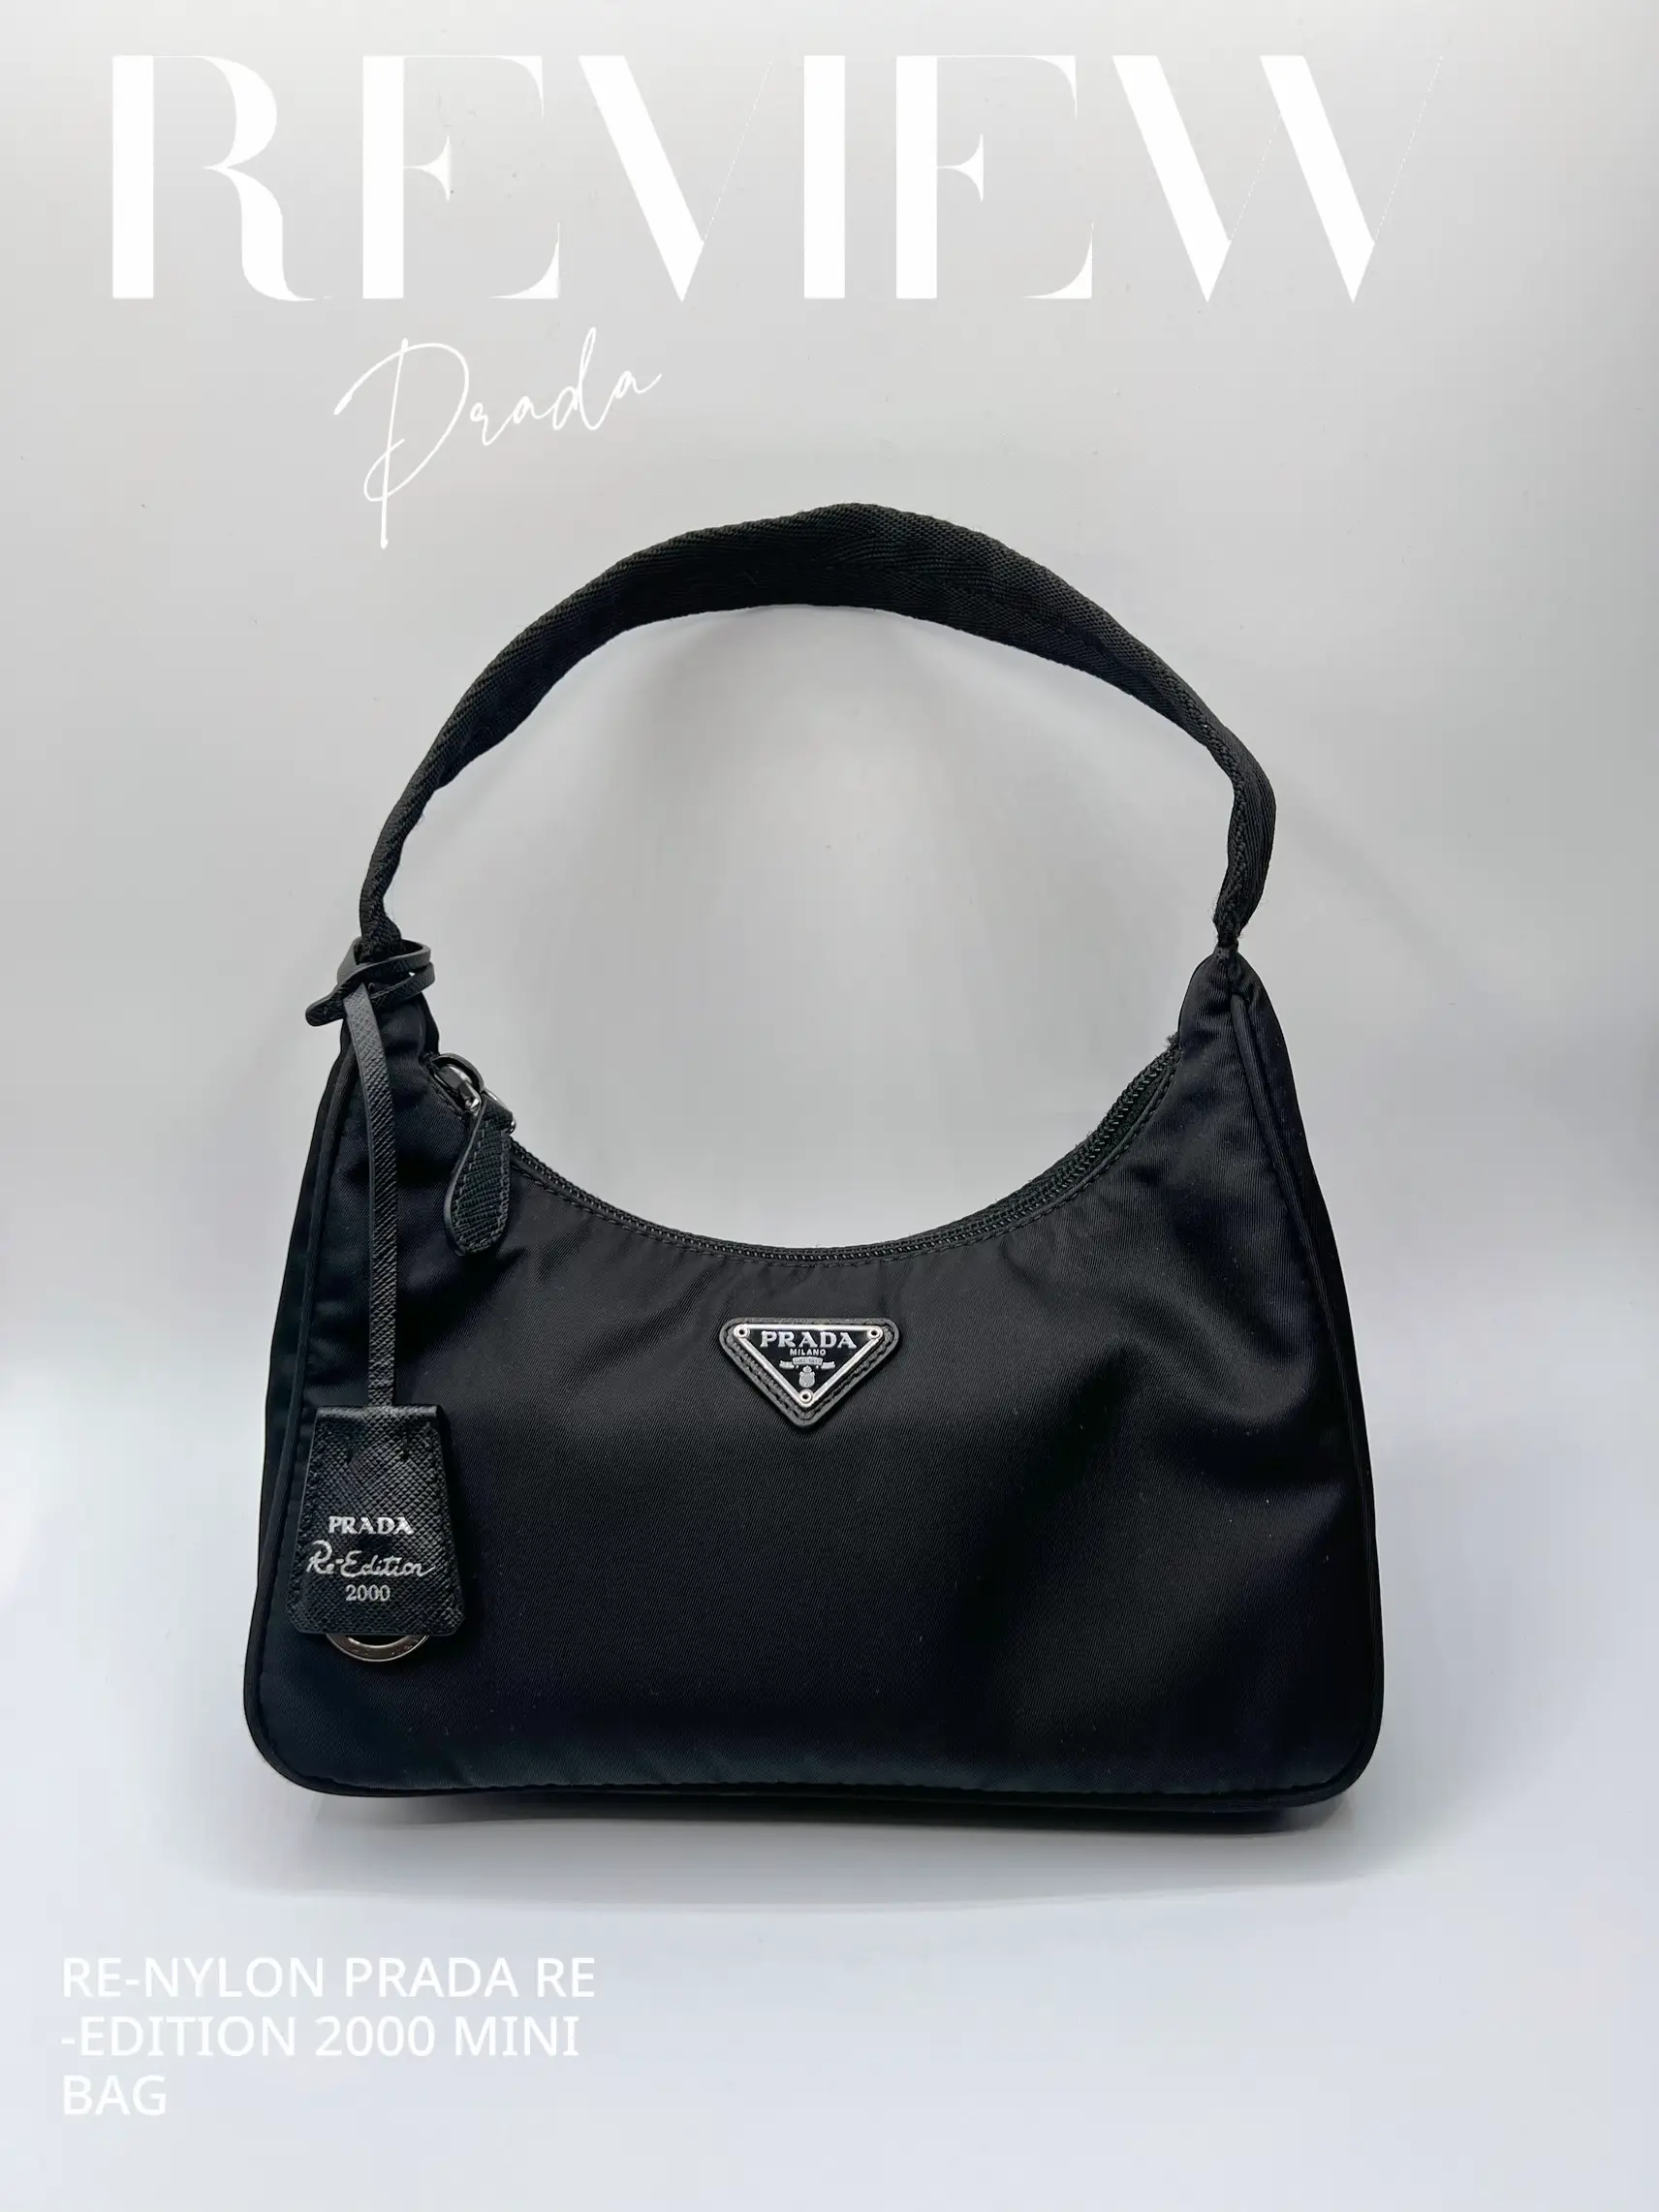 Re-Nylon Prada Re-Edition 2000 mini-bag